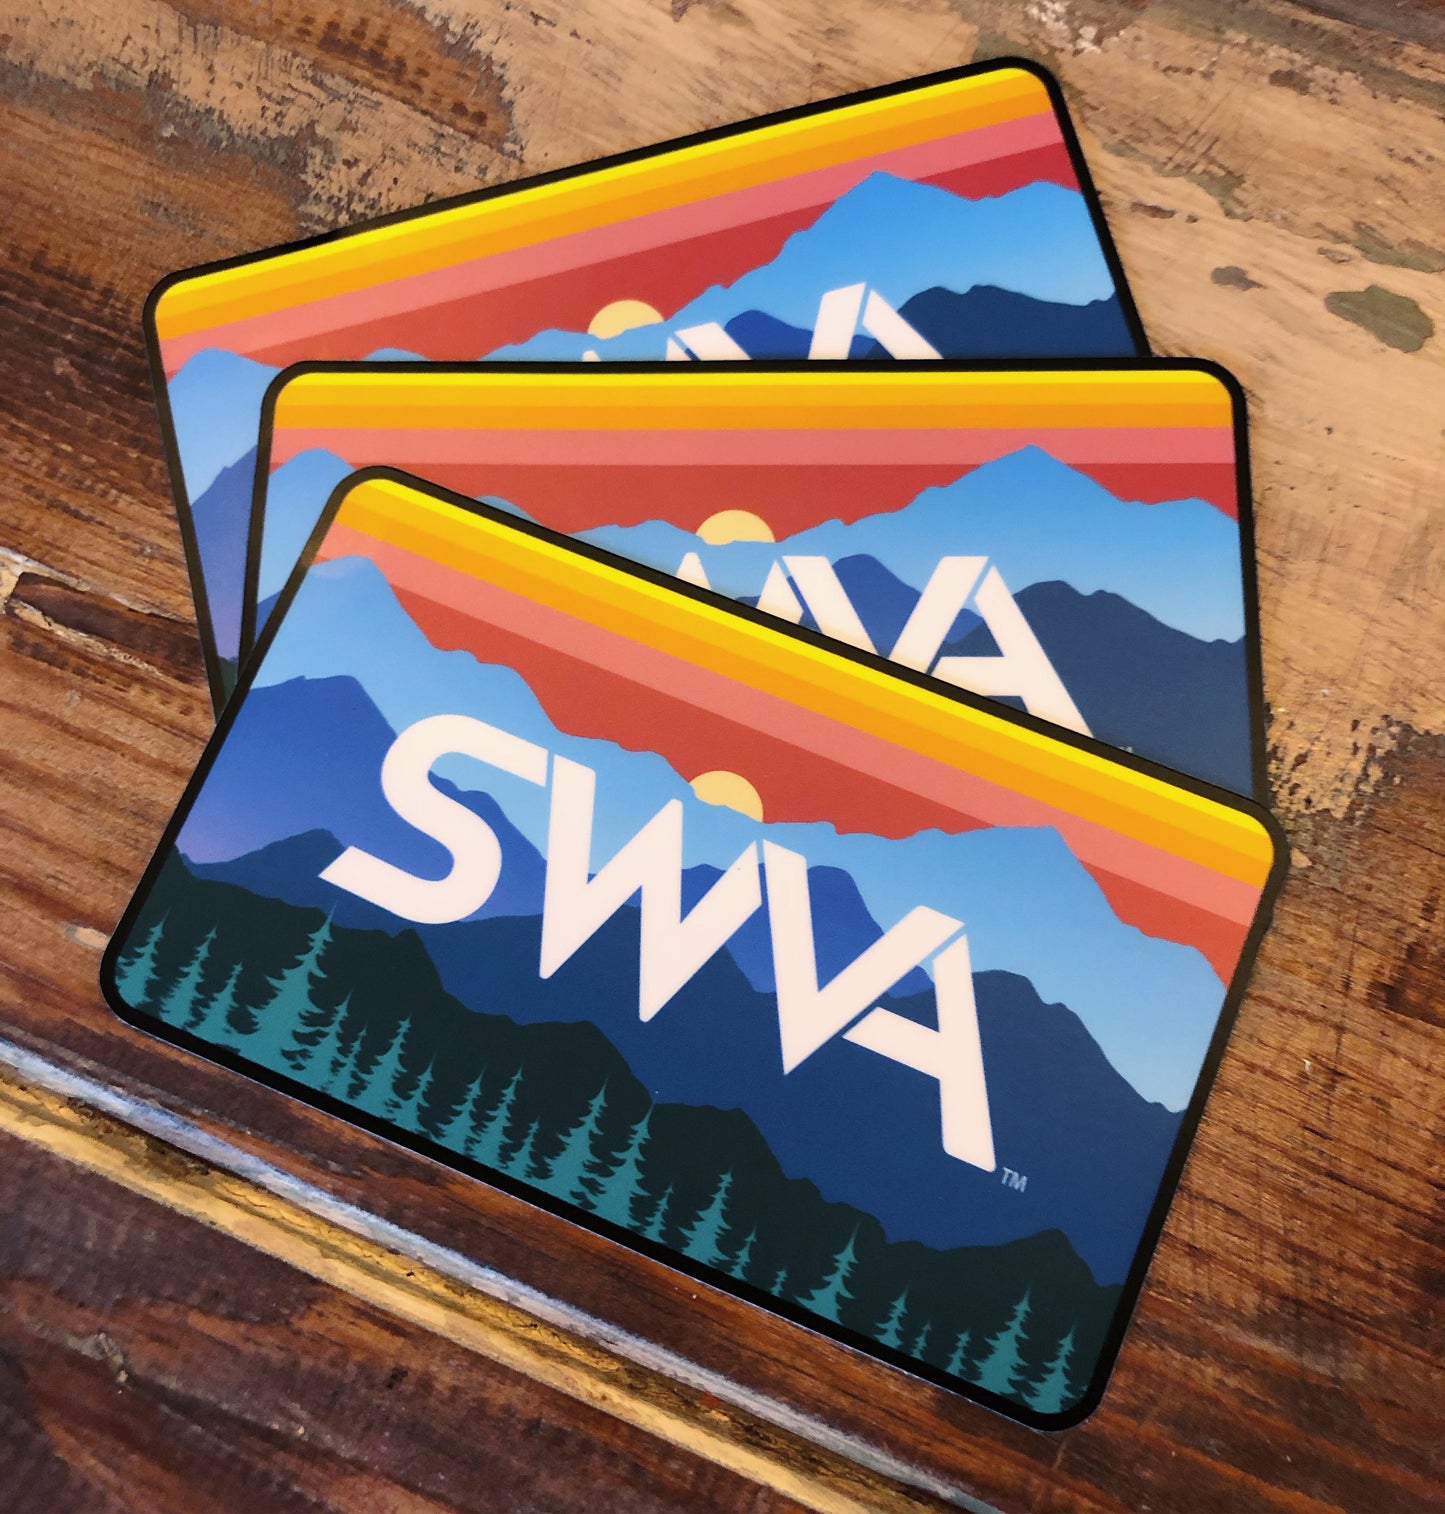 SWVA Rectangle Sticker - Single or 3 Pack